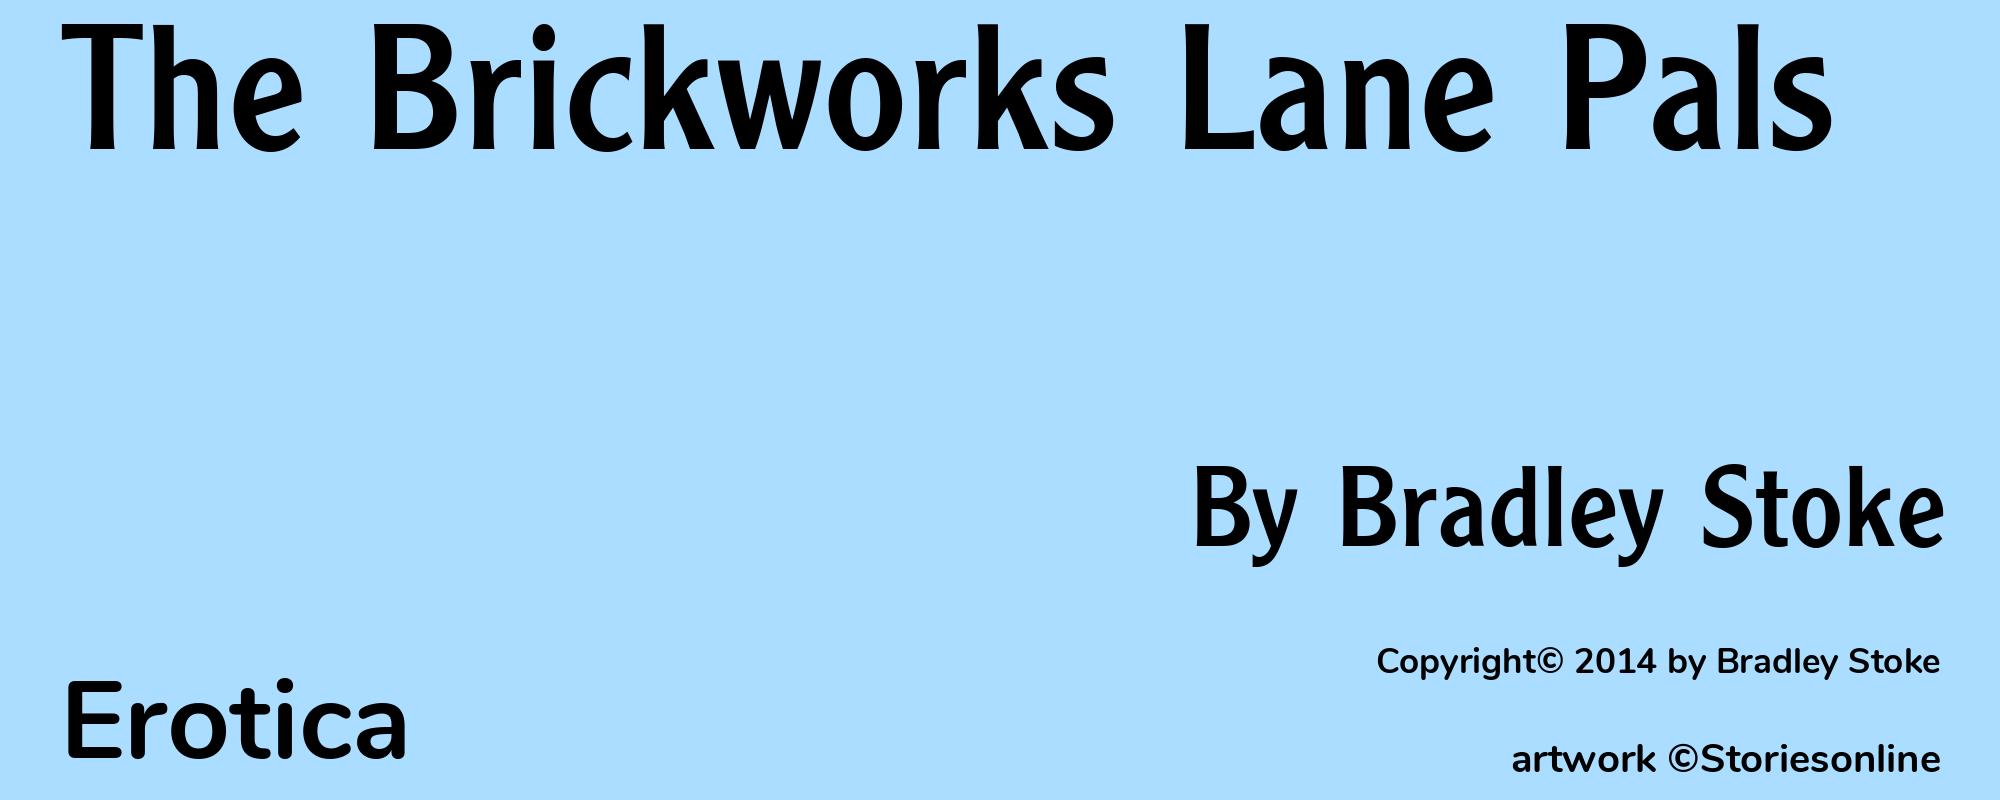 The Brickworks Lane Pals - Cover